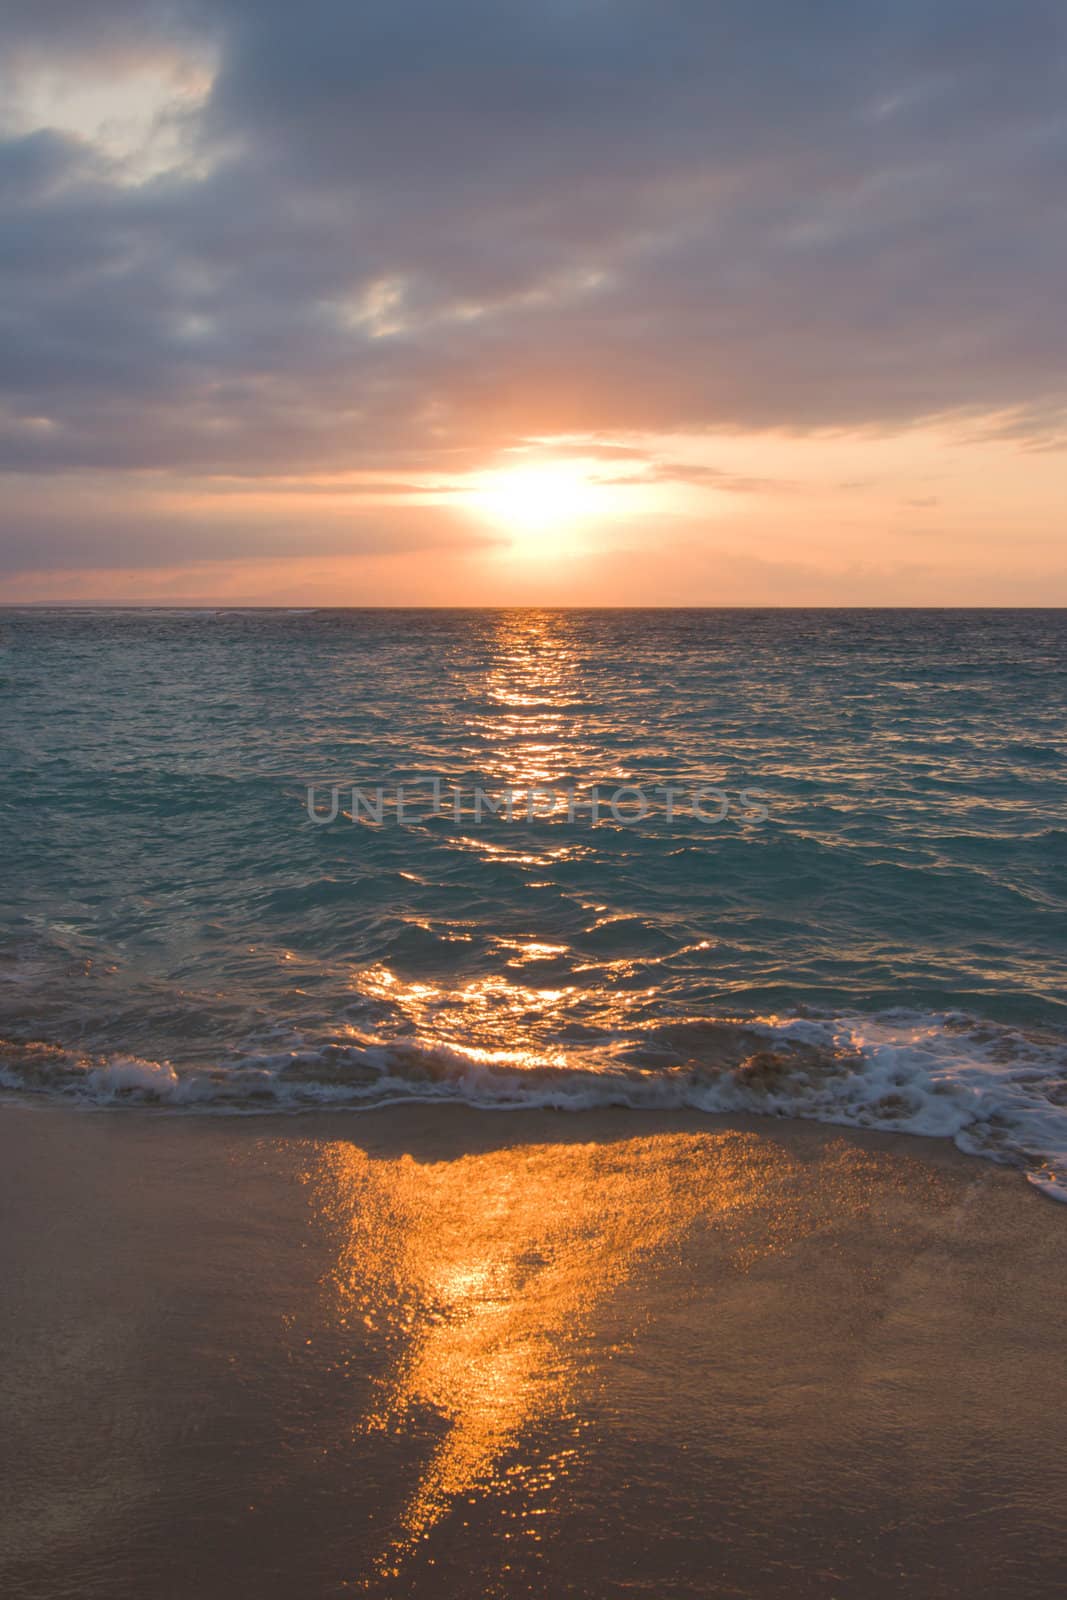 Calm ocean and beach on tropical sunrise by dimol